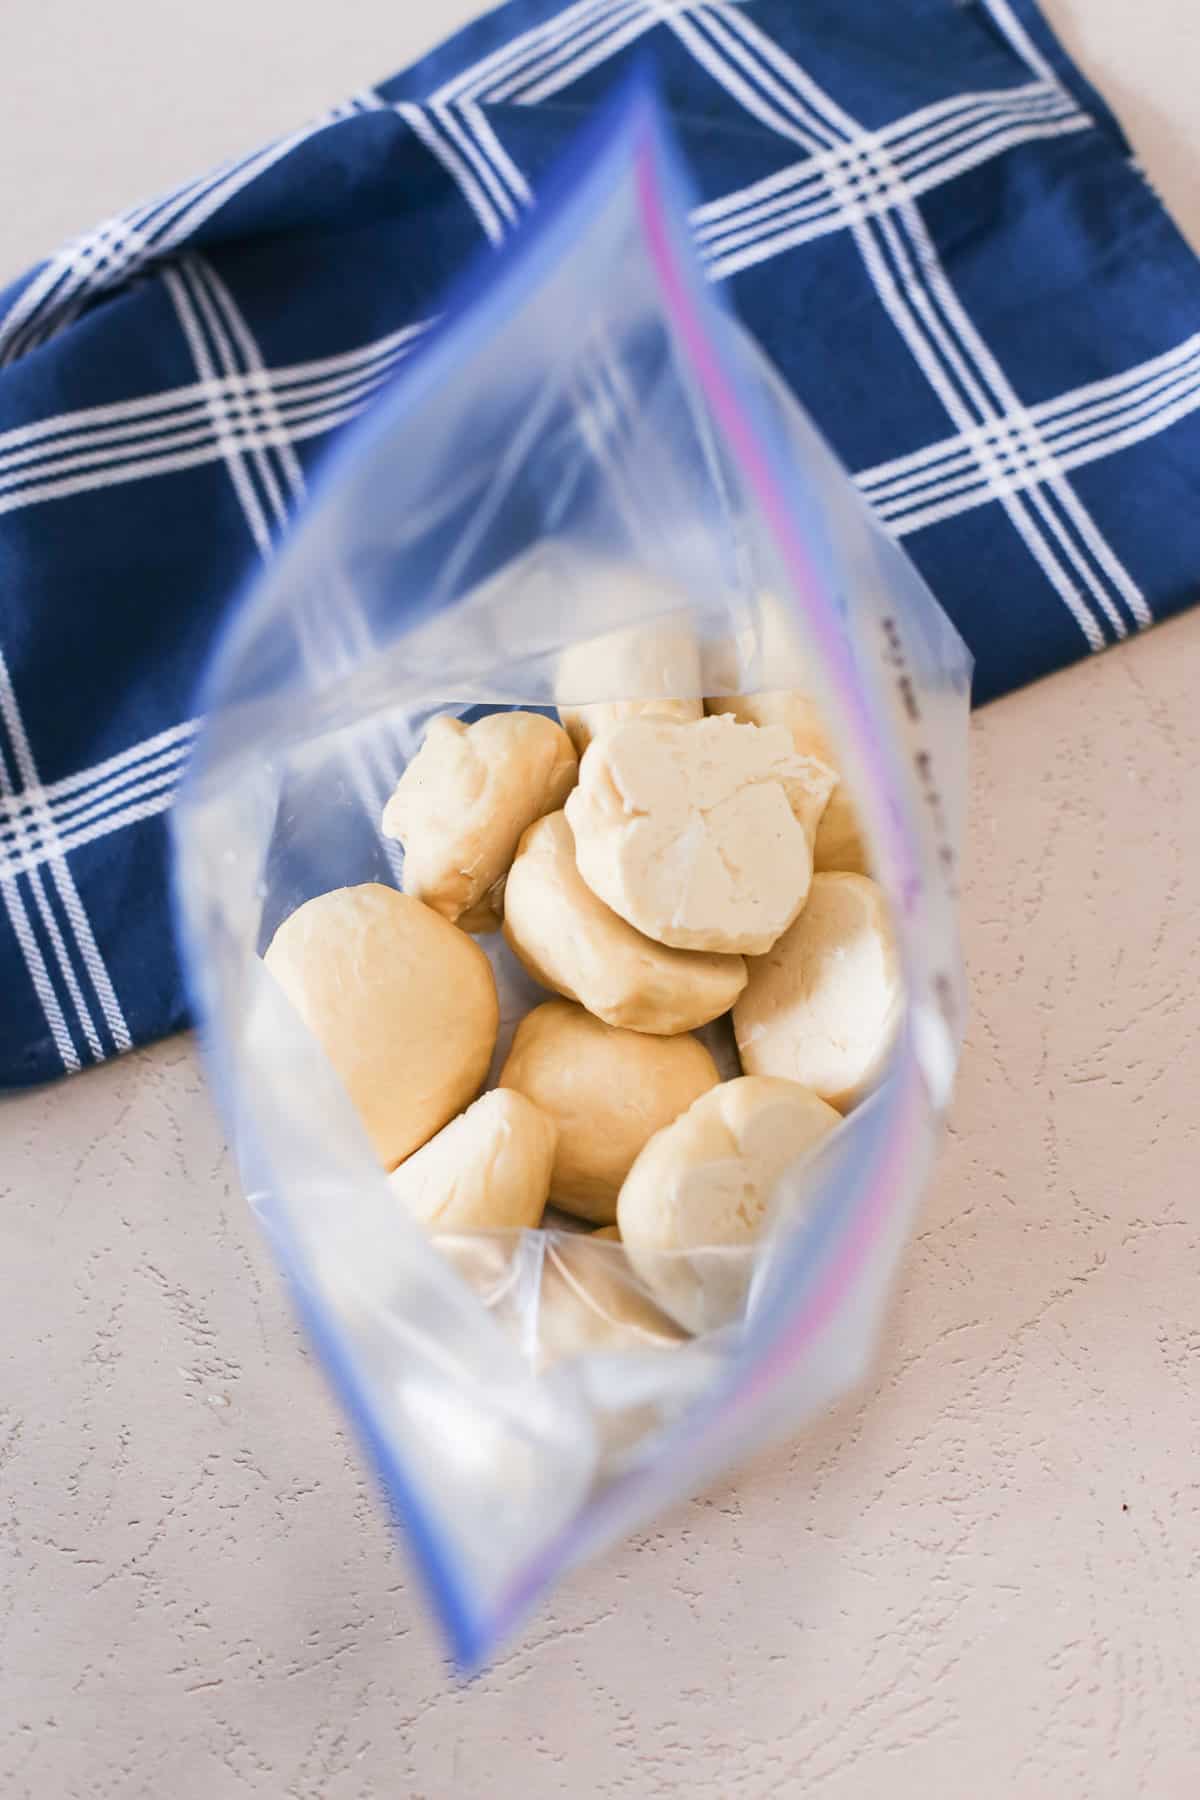 Frozen bread machine dough balls in a freezer bag. 